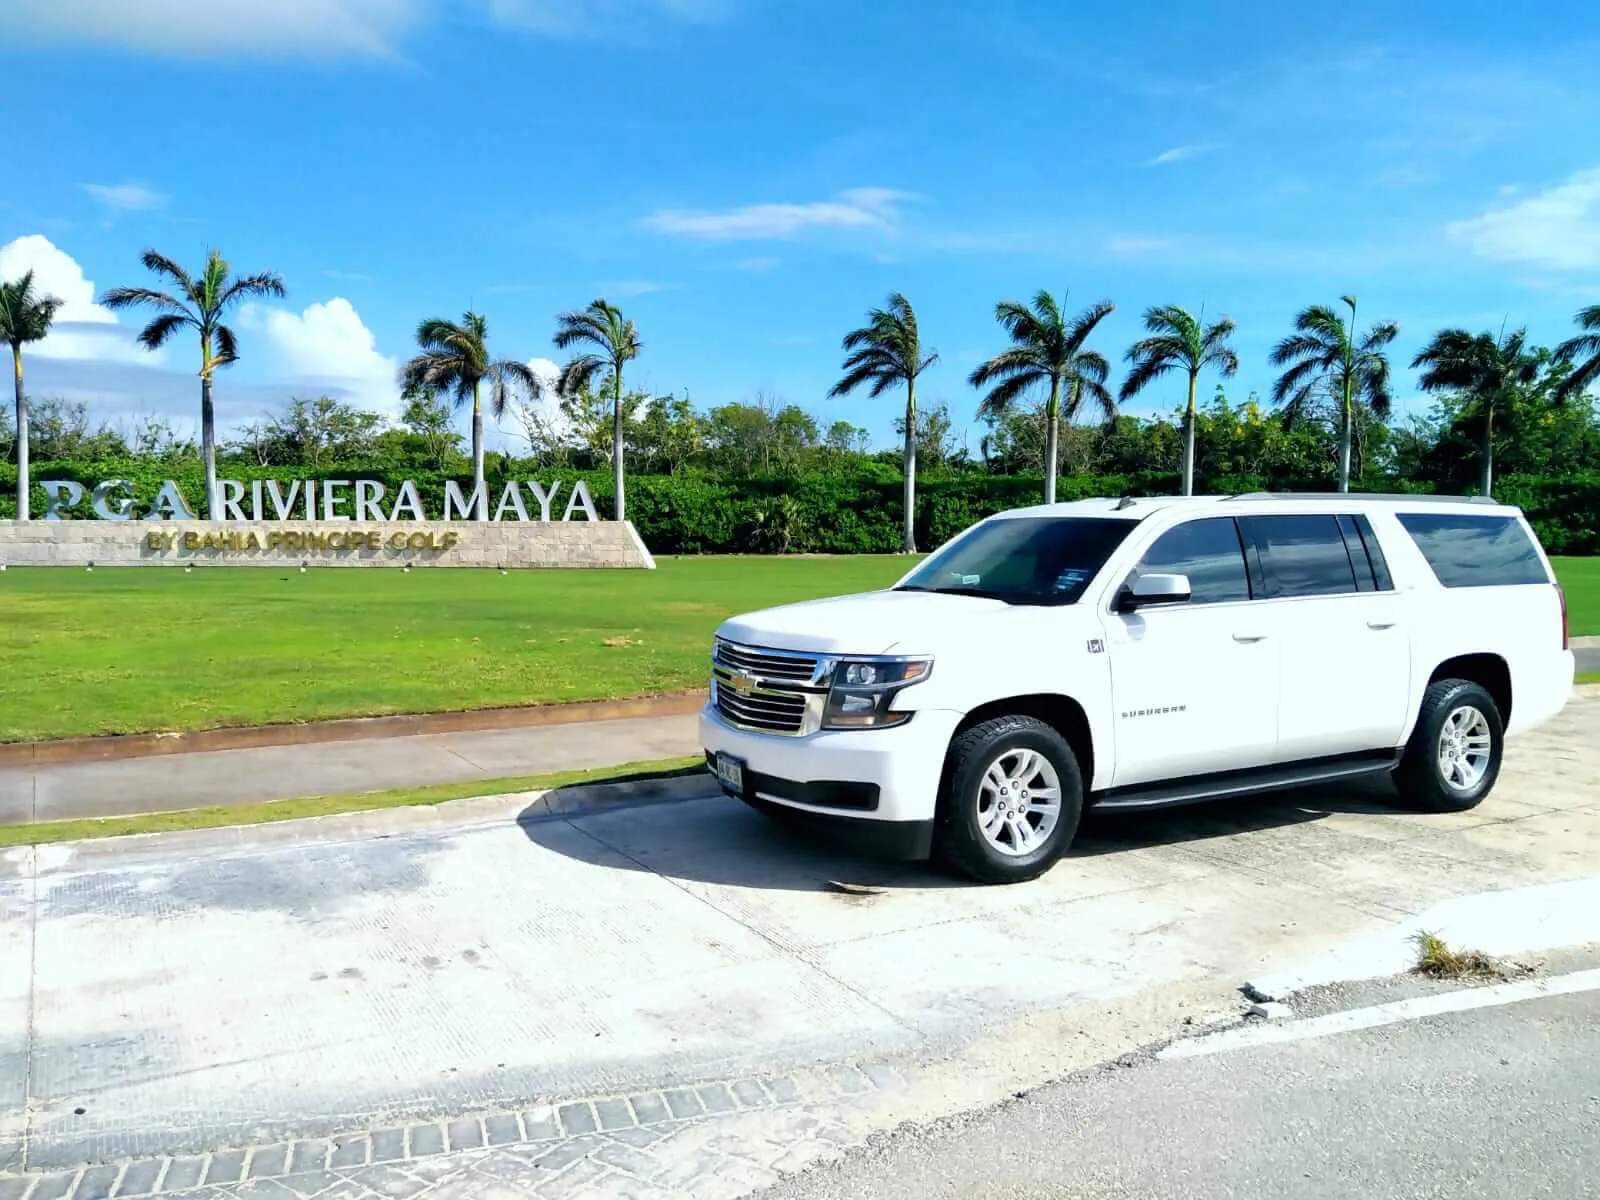 Cancun Luxury Transportation SUV Private Transportation in the Riviera Maya.